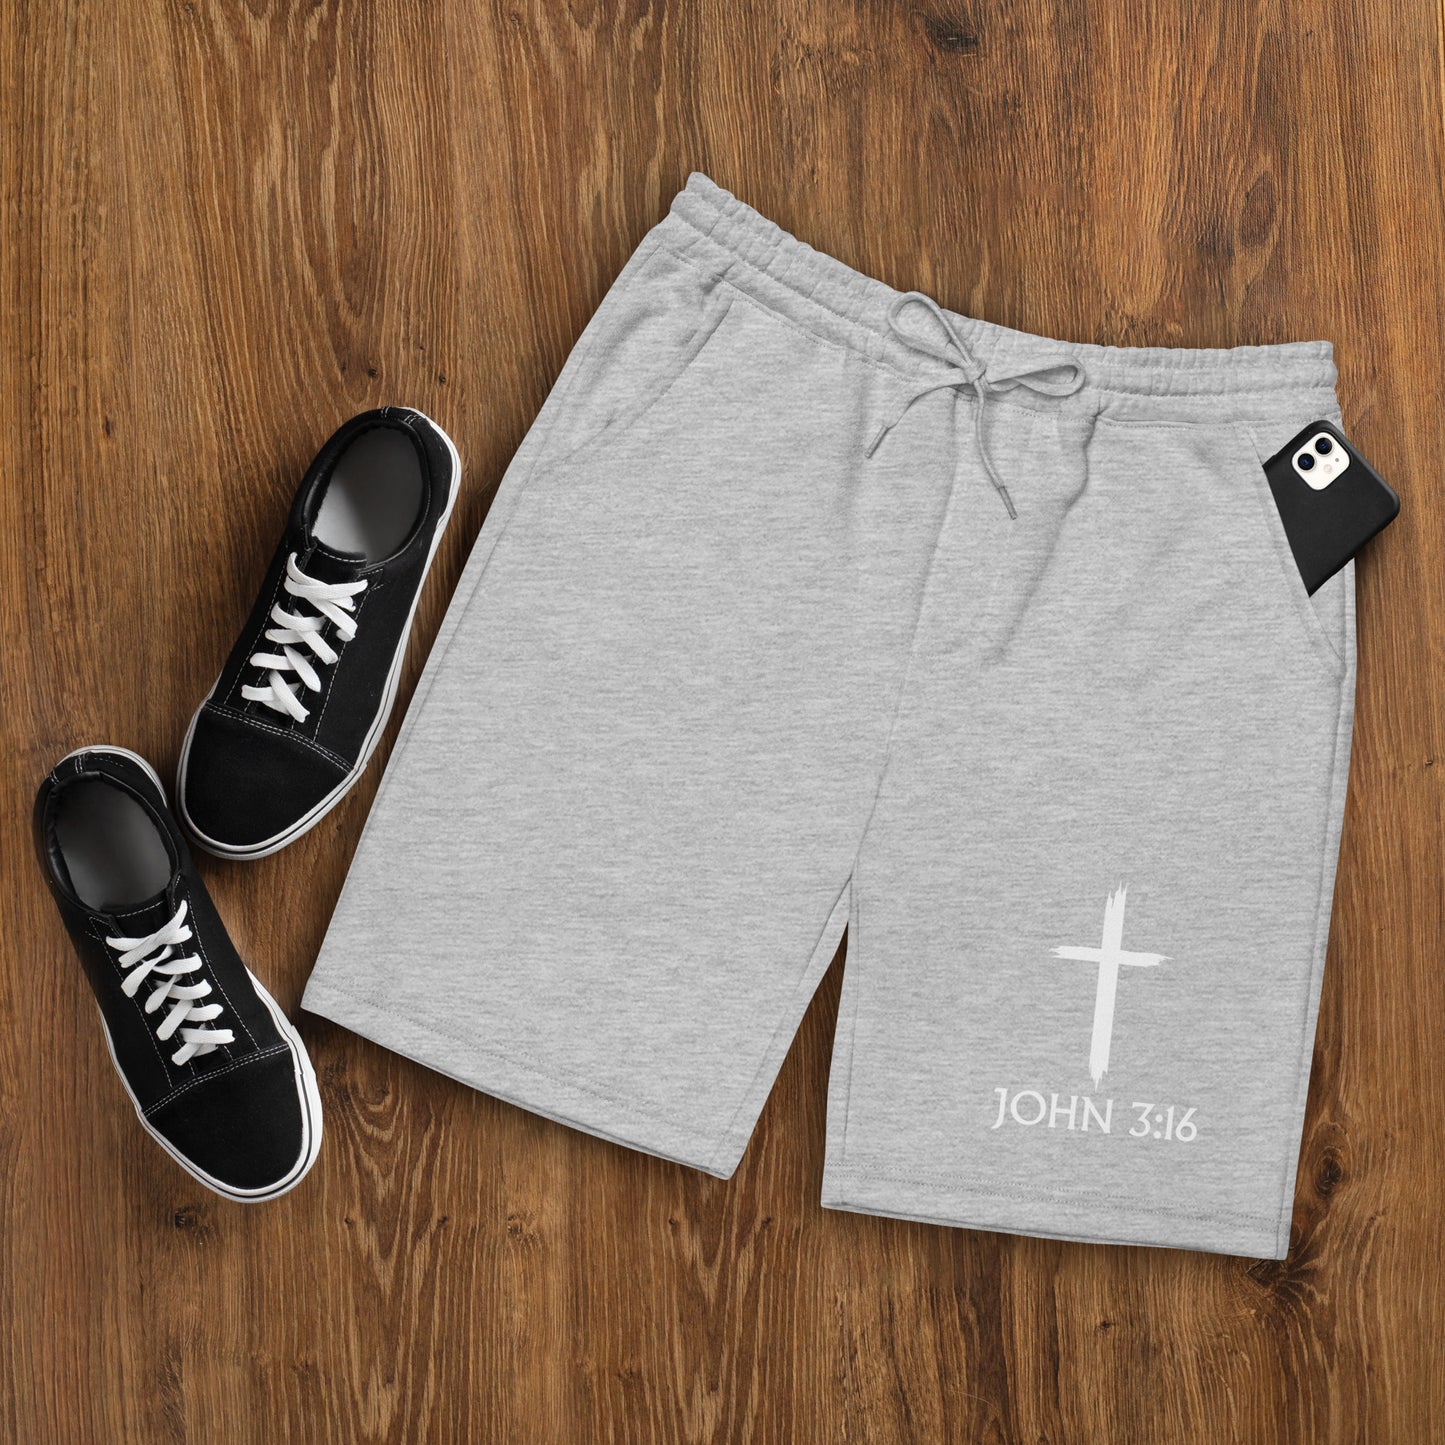 John 3:16 Men's Fleece Shorts